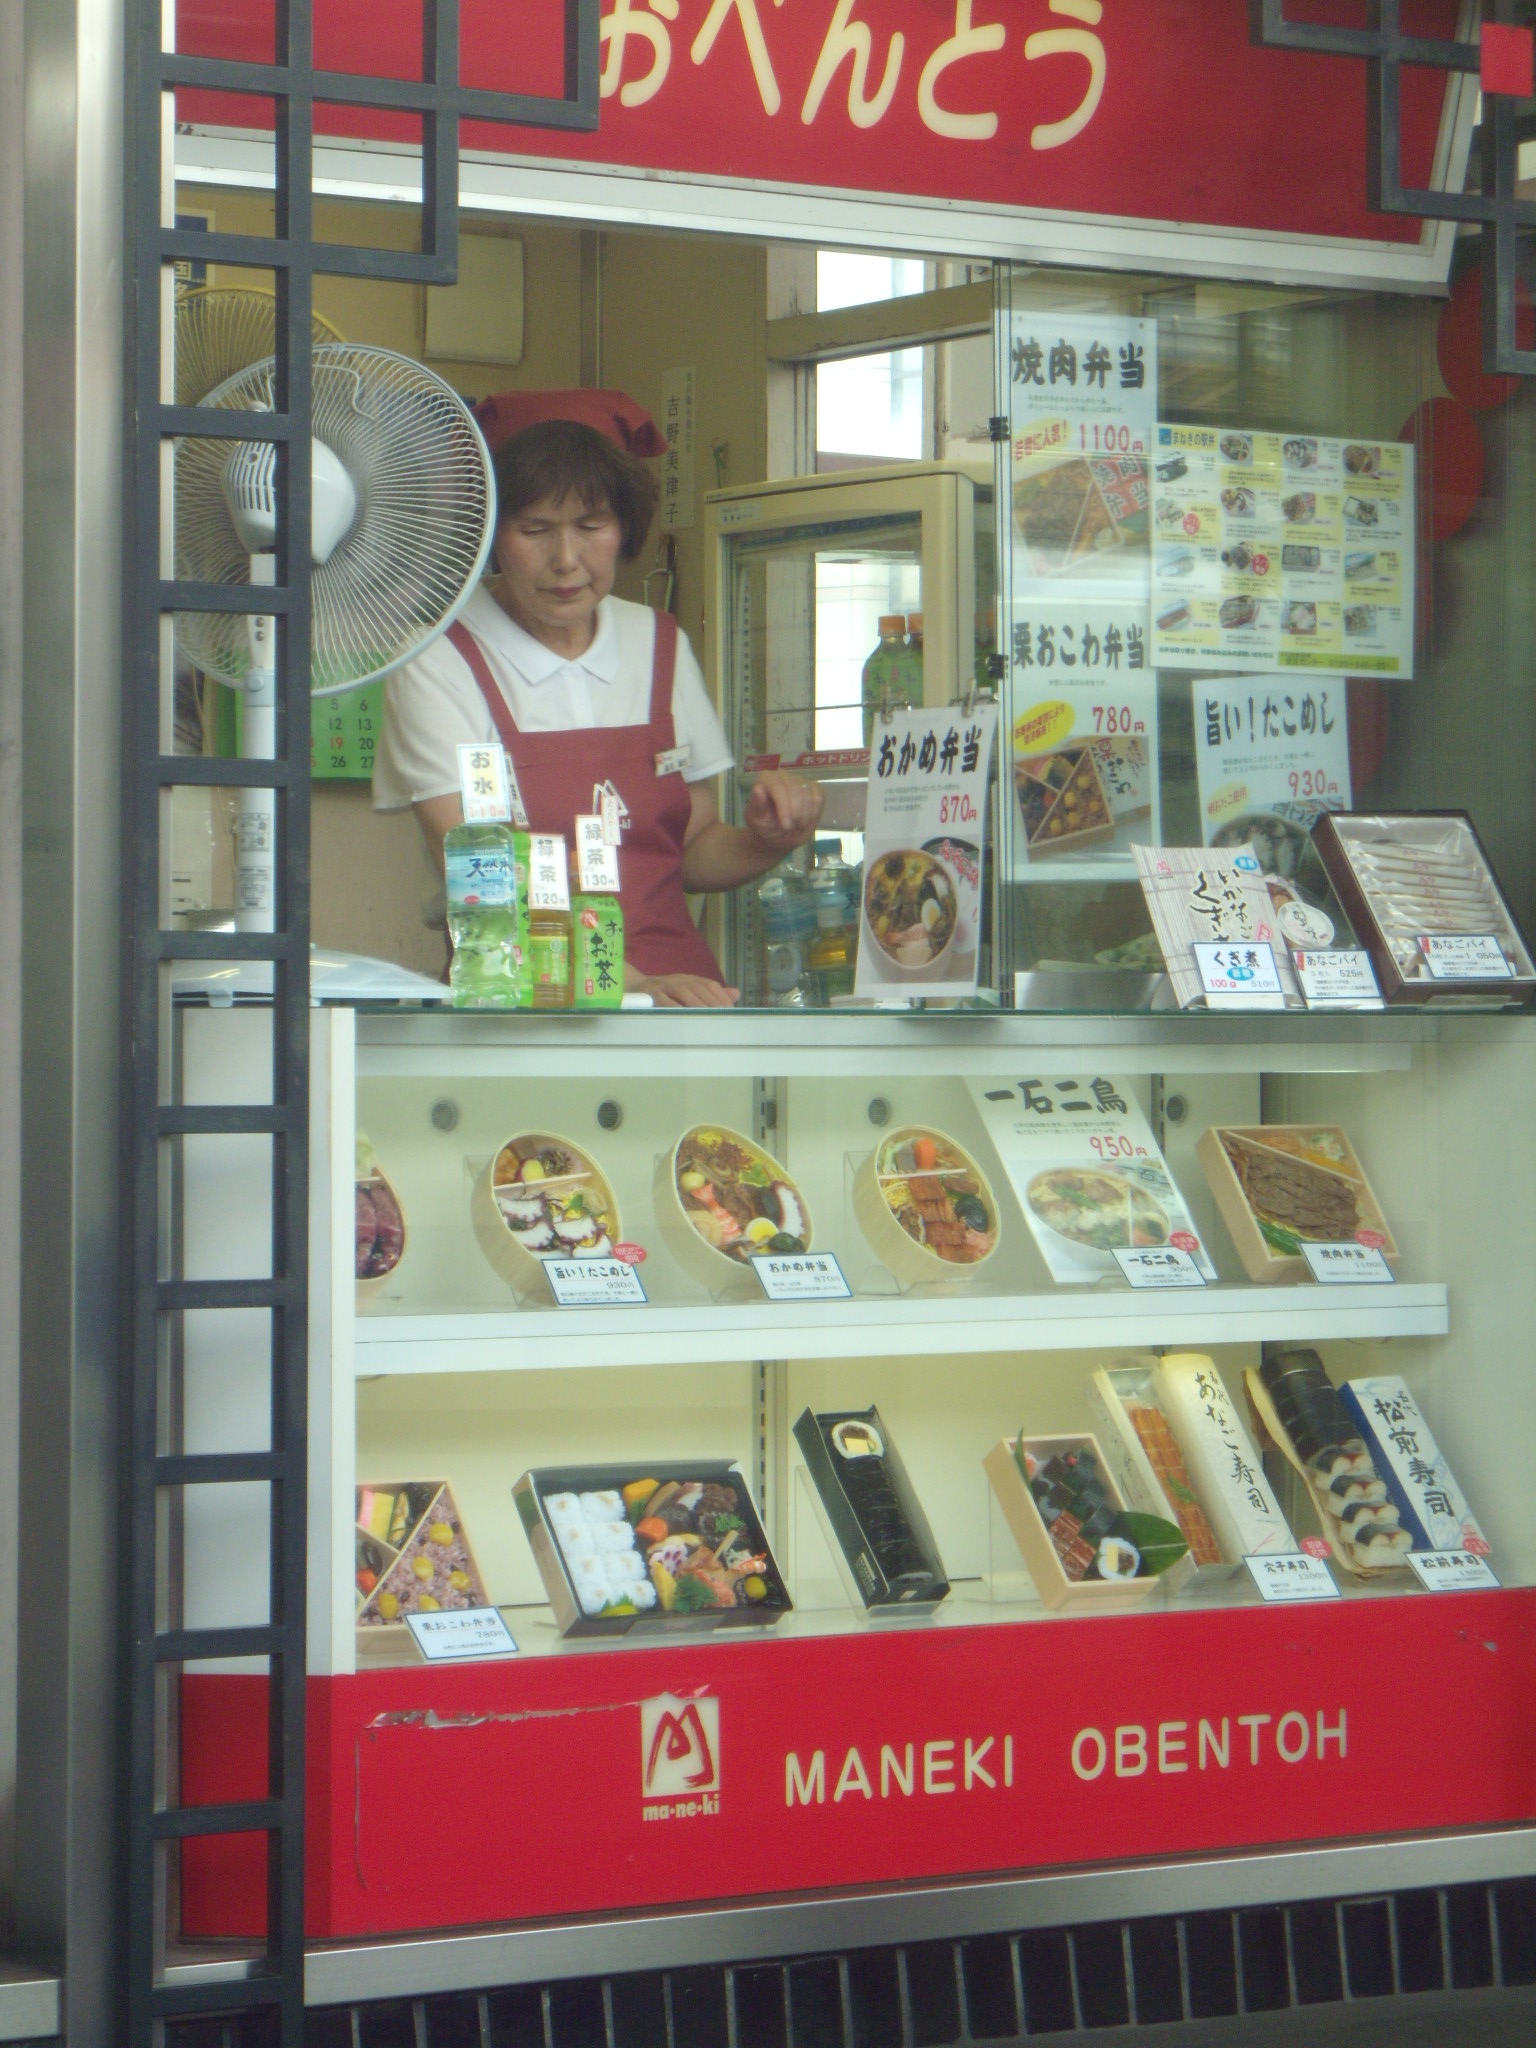 Japanese Train Station Food Service